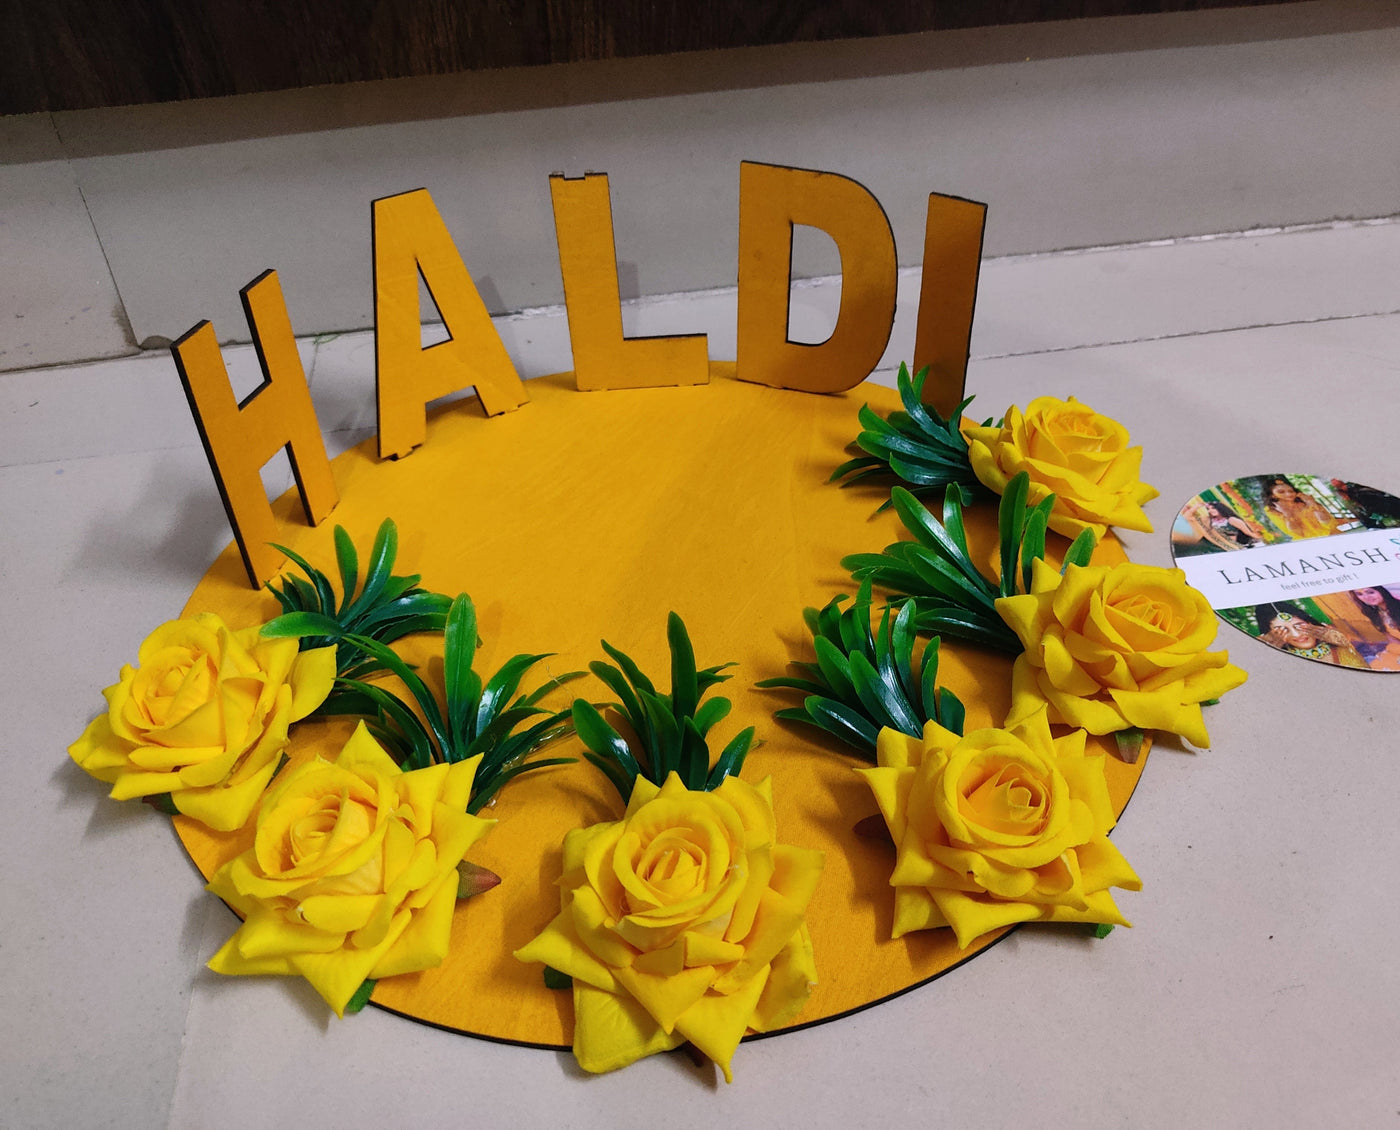 Lamansh LAMANSH Latest Haldi Tray set for Wedding Ceremony / Decorated Floral Mdf Thali Platter for Haldi ceremony 💛